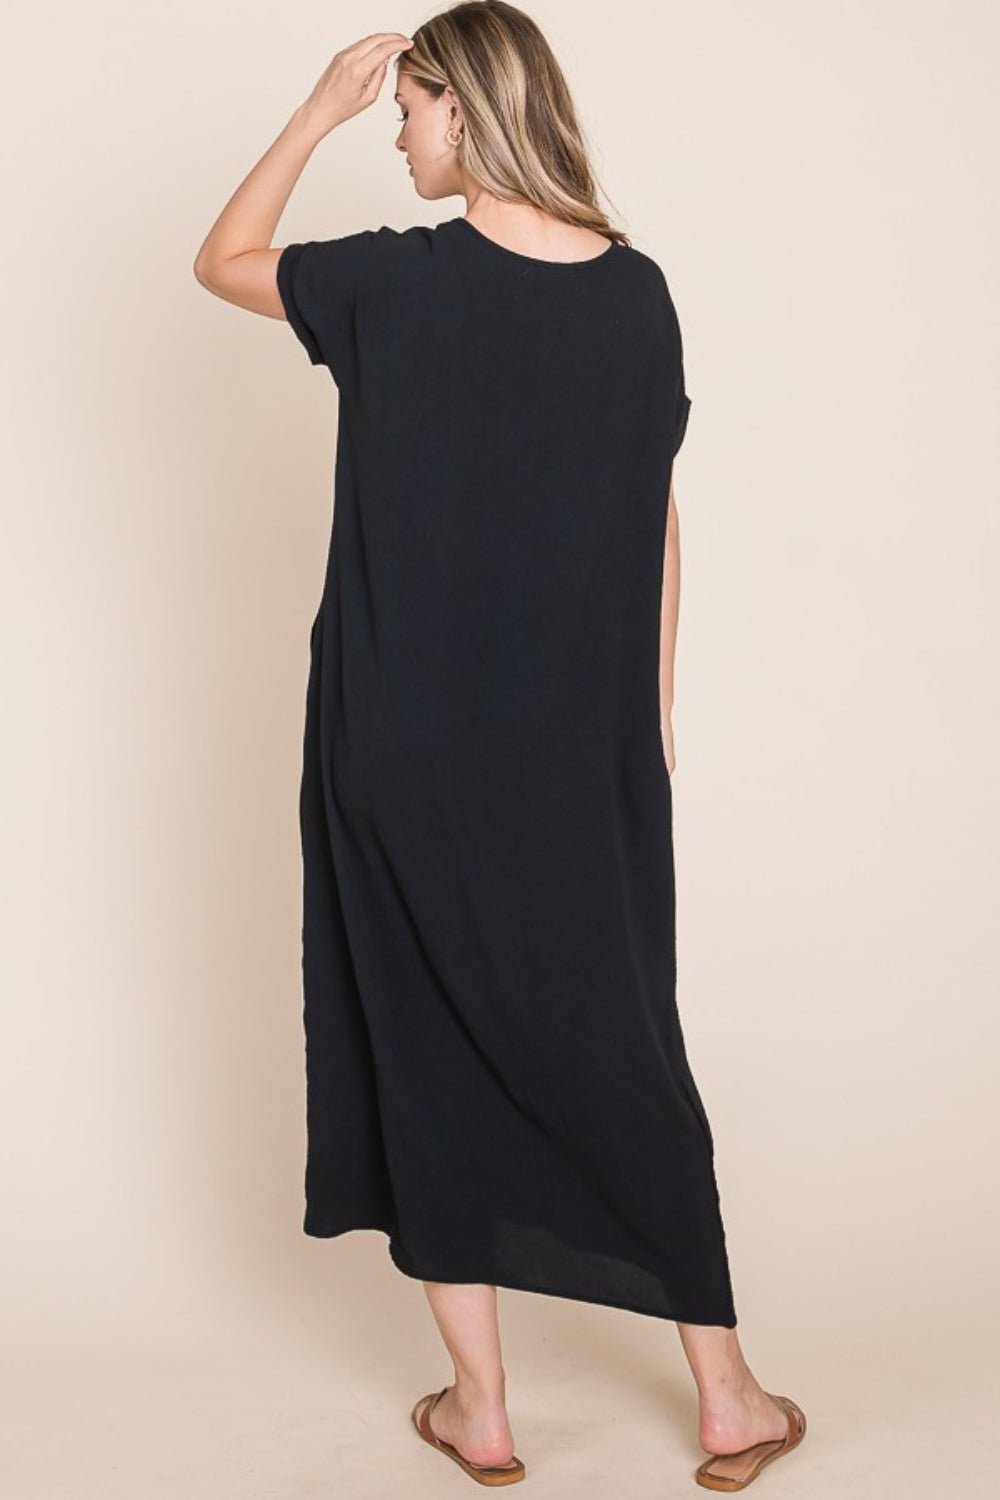 BOMBOM Round Neck Short Sleeve Midi Dress with Pockets - Happily Ever Atchison Shop Co.